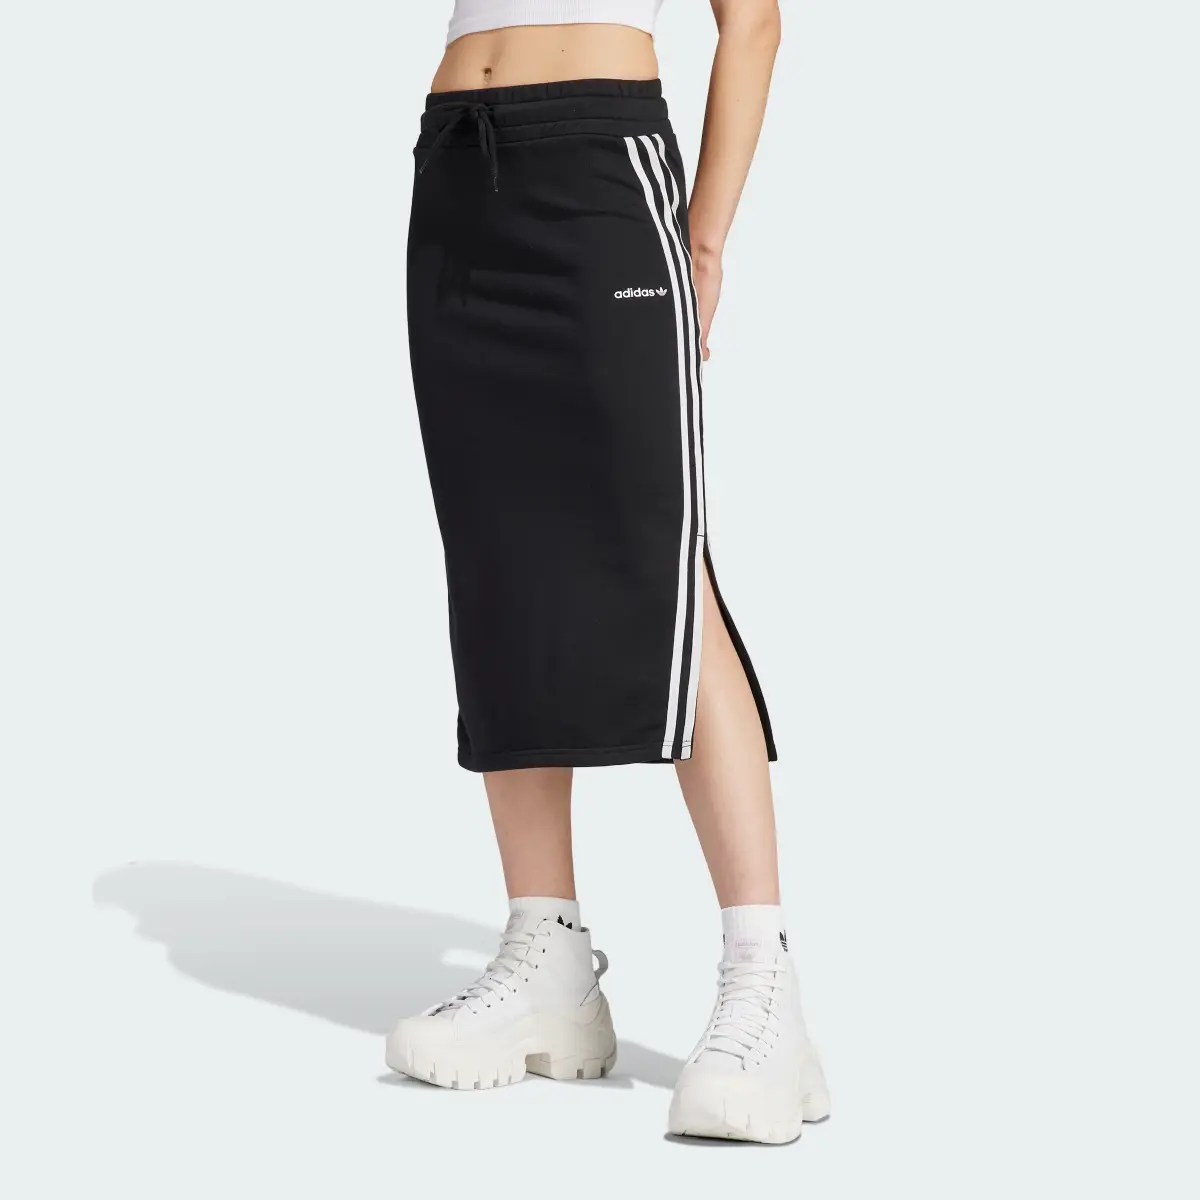 Adidas 3-Stripes Skirt. 1